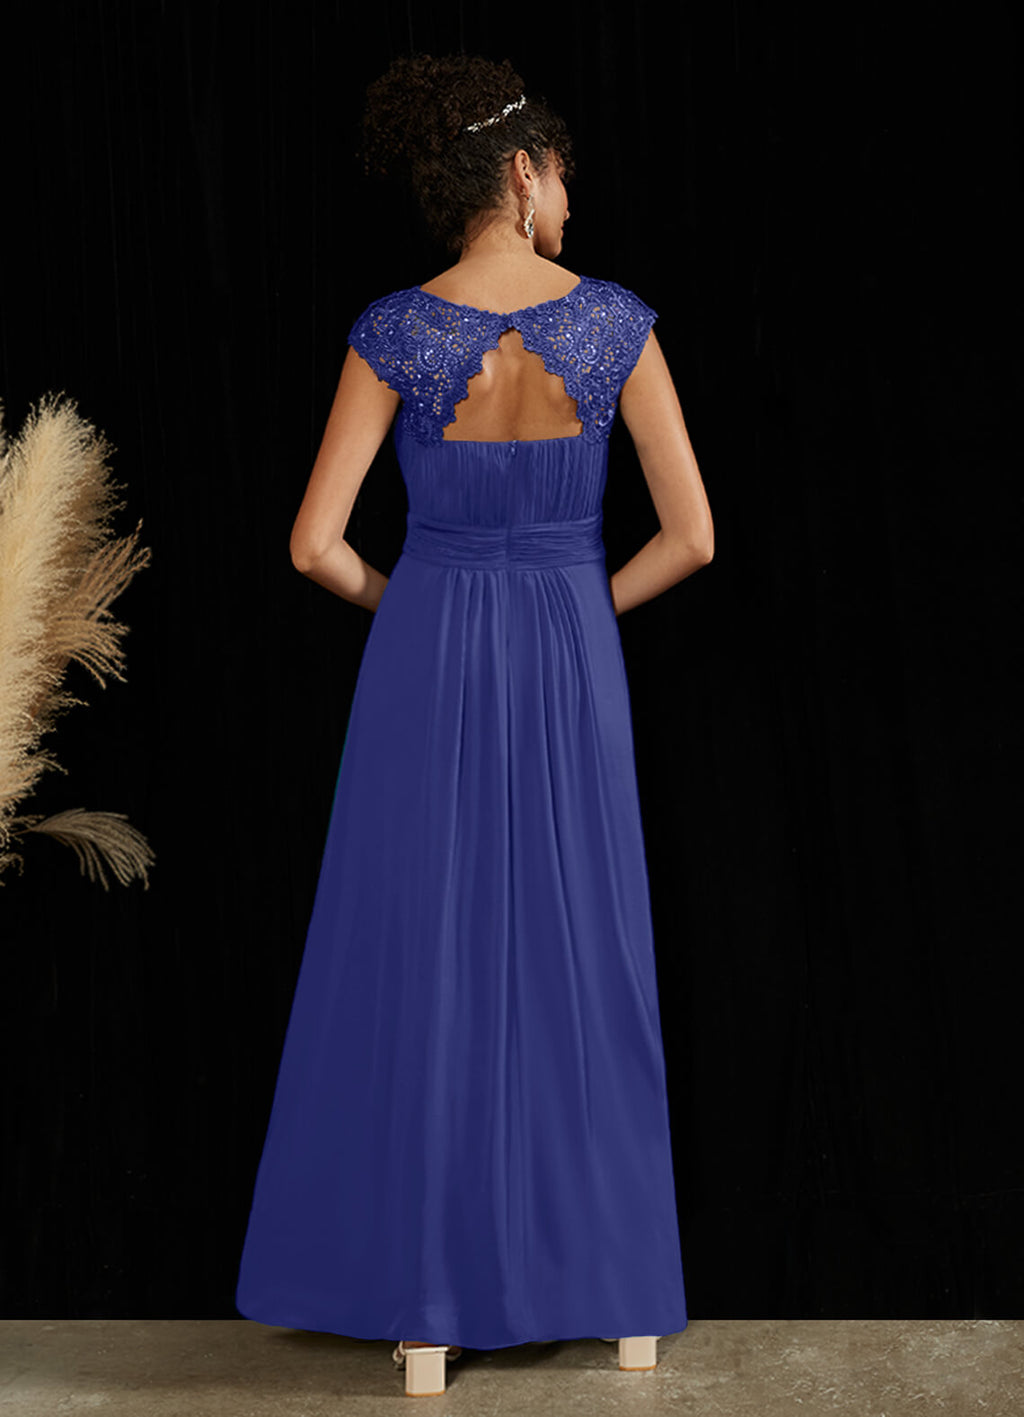 NZ Bridal Royal Blue Pleated Chiffon Lace Backless bridesmaid dresses 09996ep Ryan a